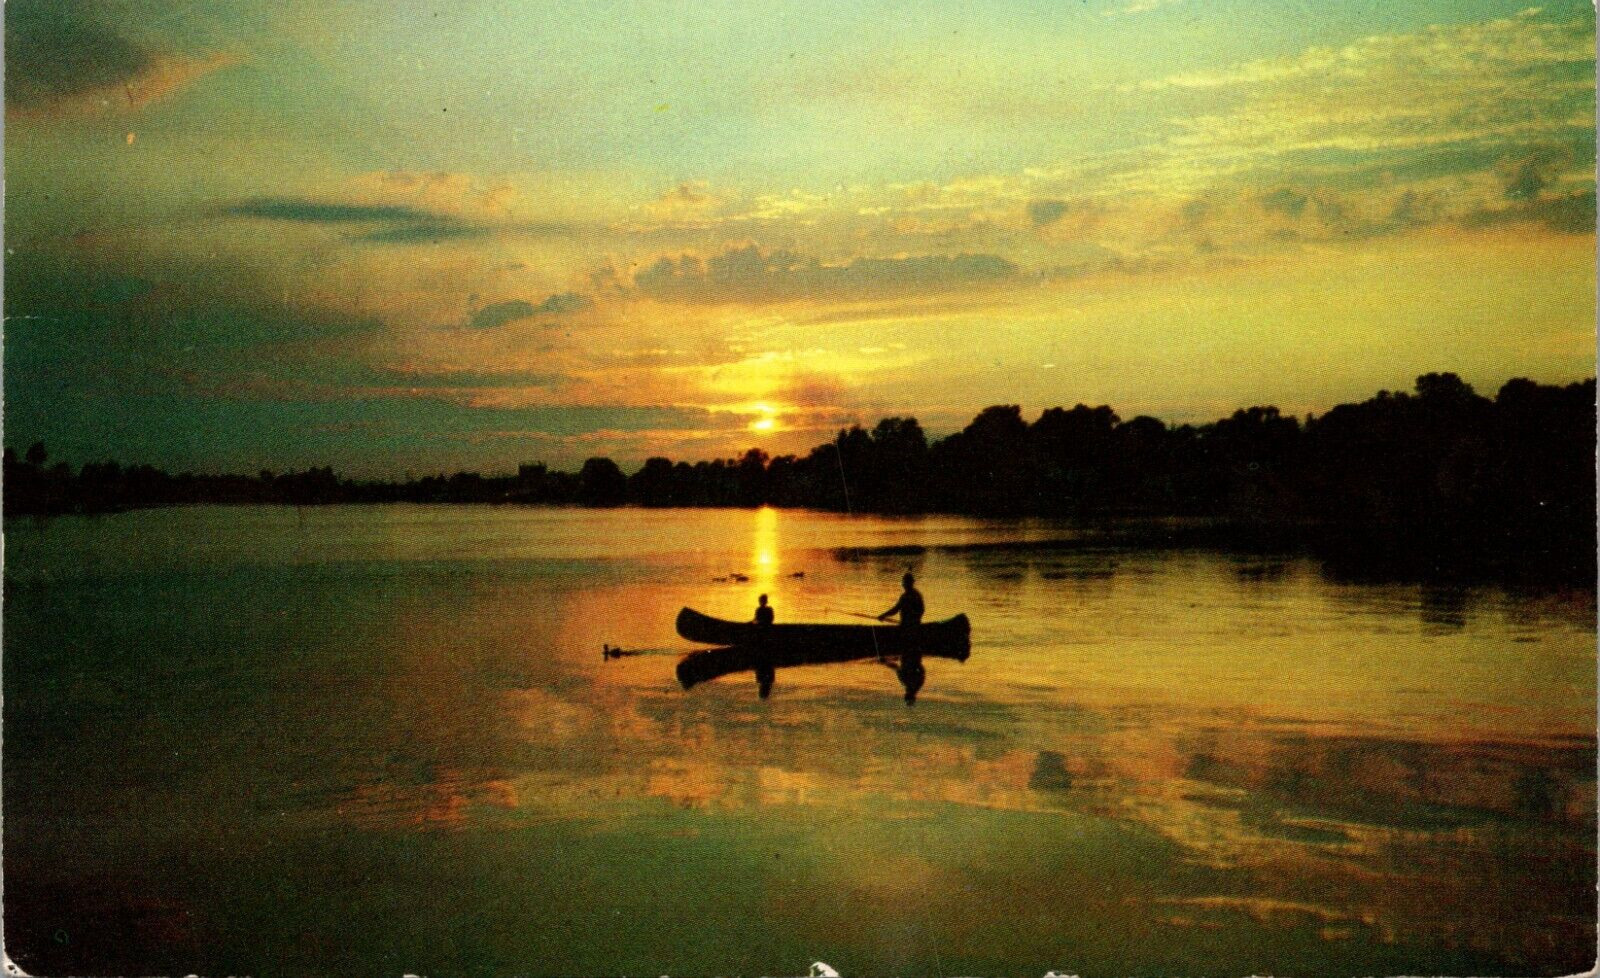 Man & Boy Fishing From Canoe On Lake At Sunset Postcard L66